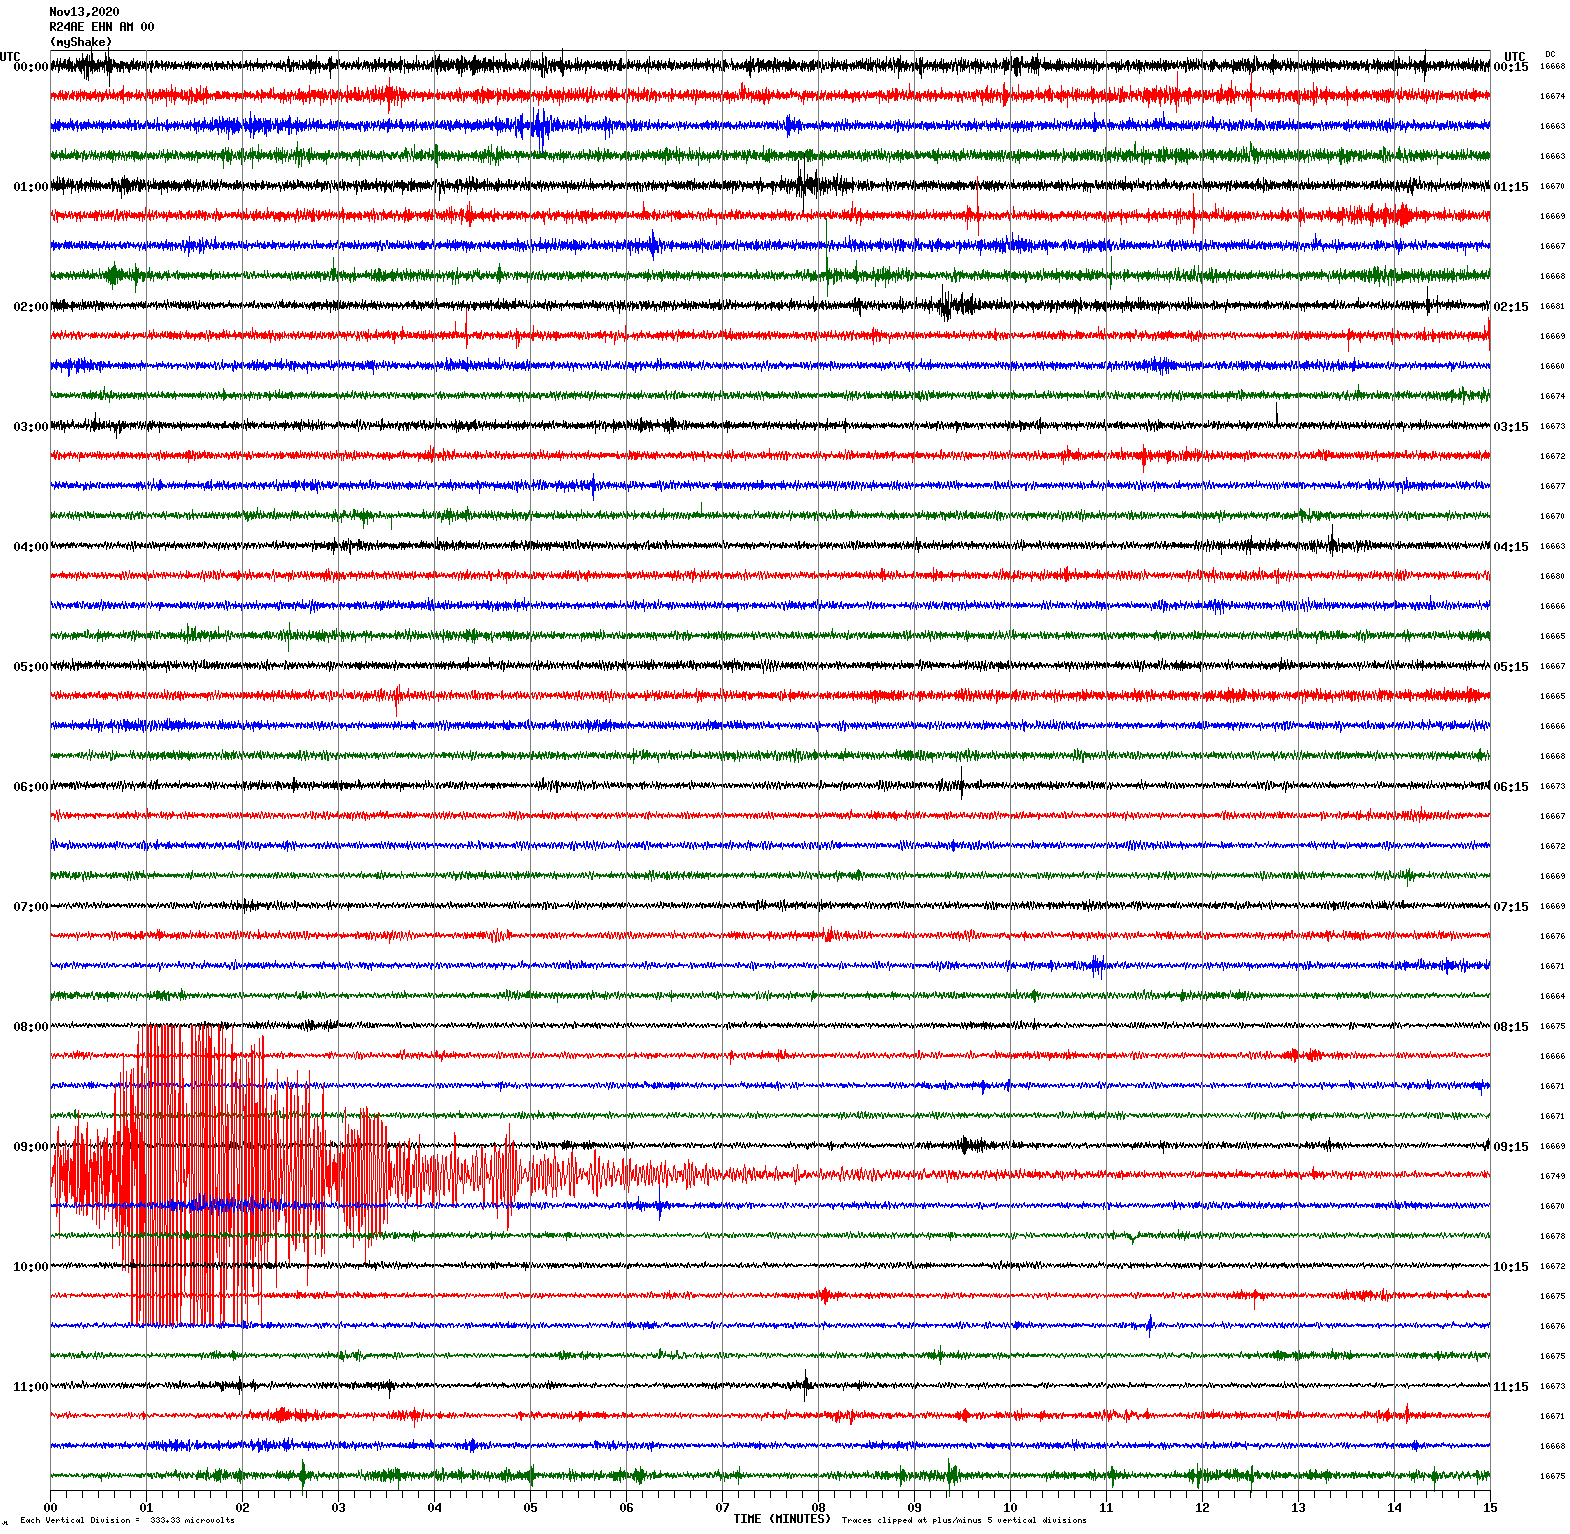 /seismic-data/R24AE/R24AE_EHE_AM_00.2020111300.gif